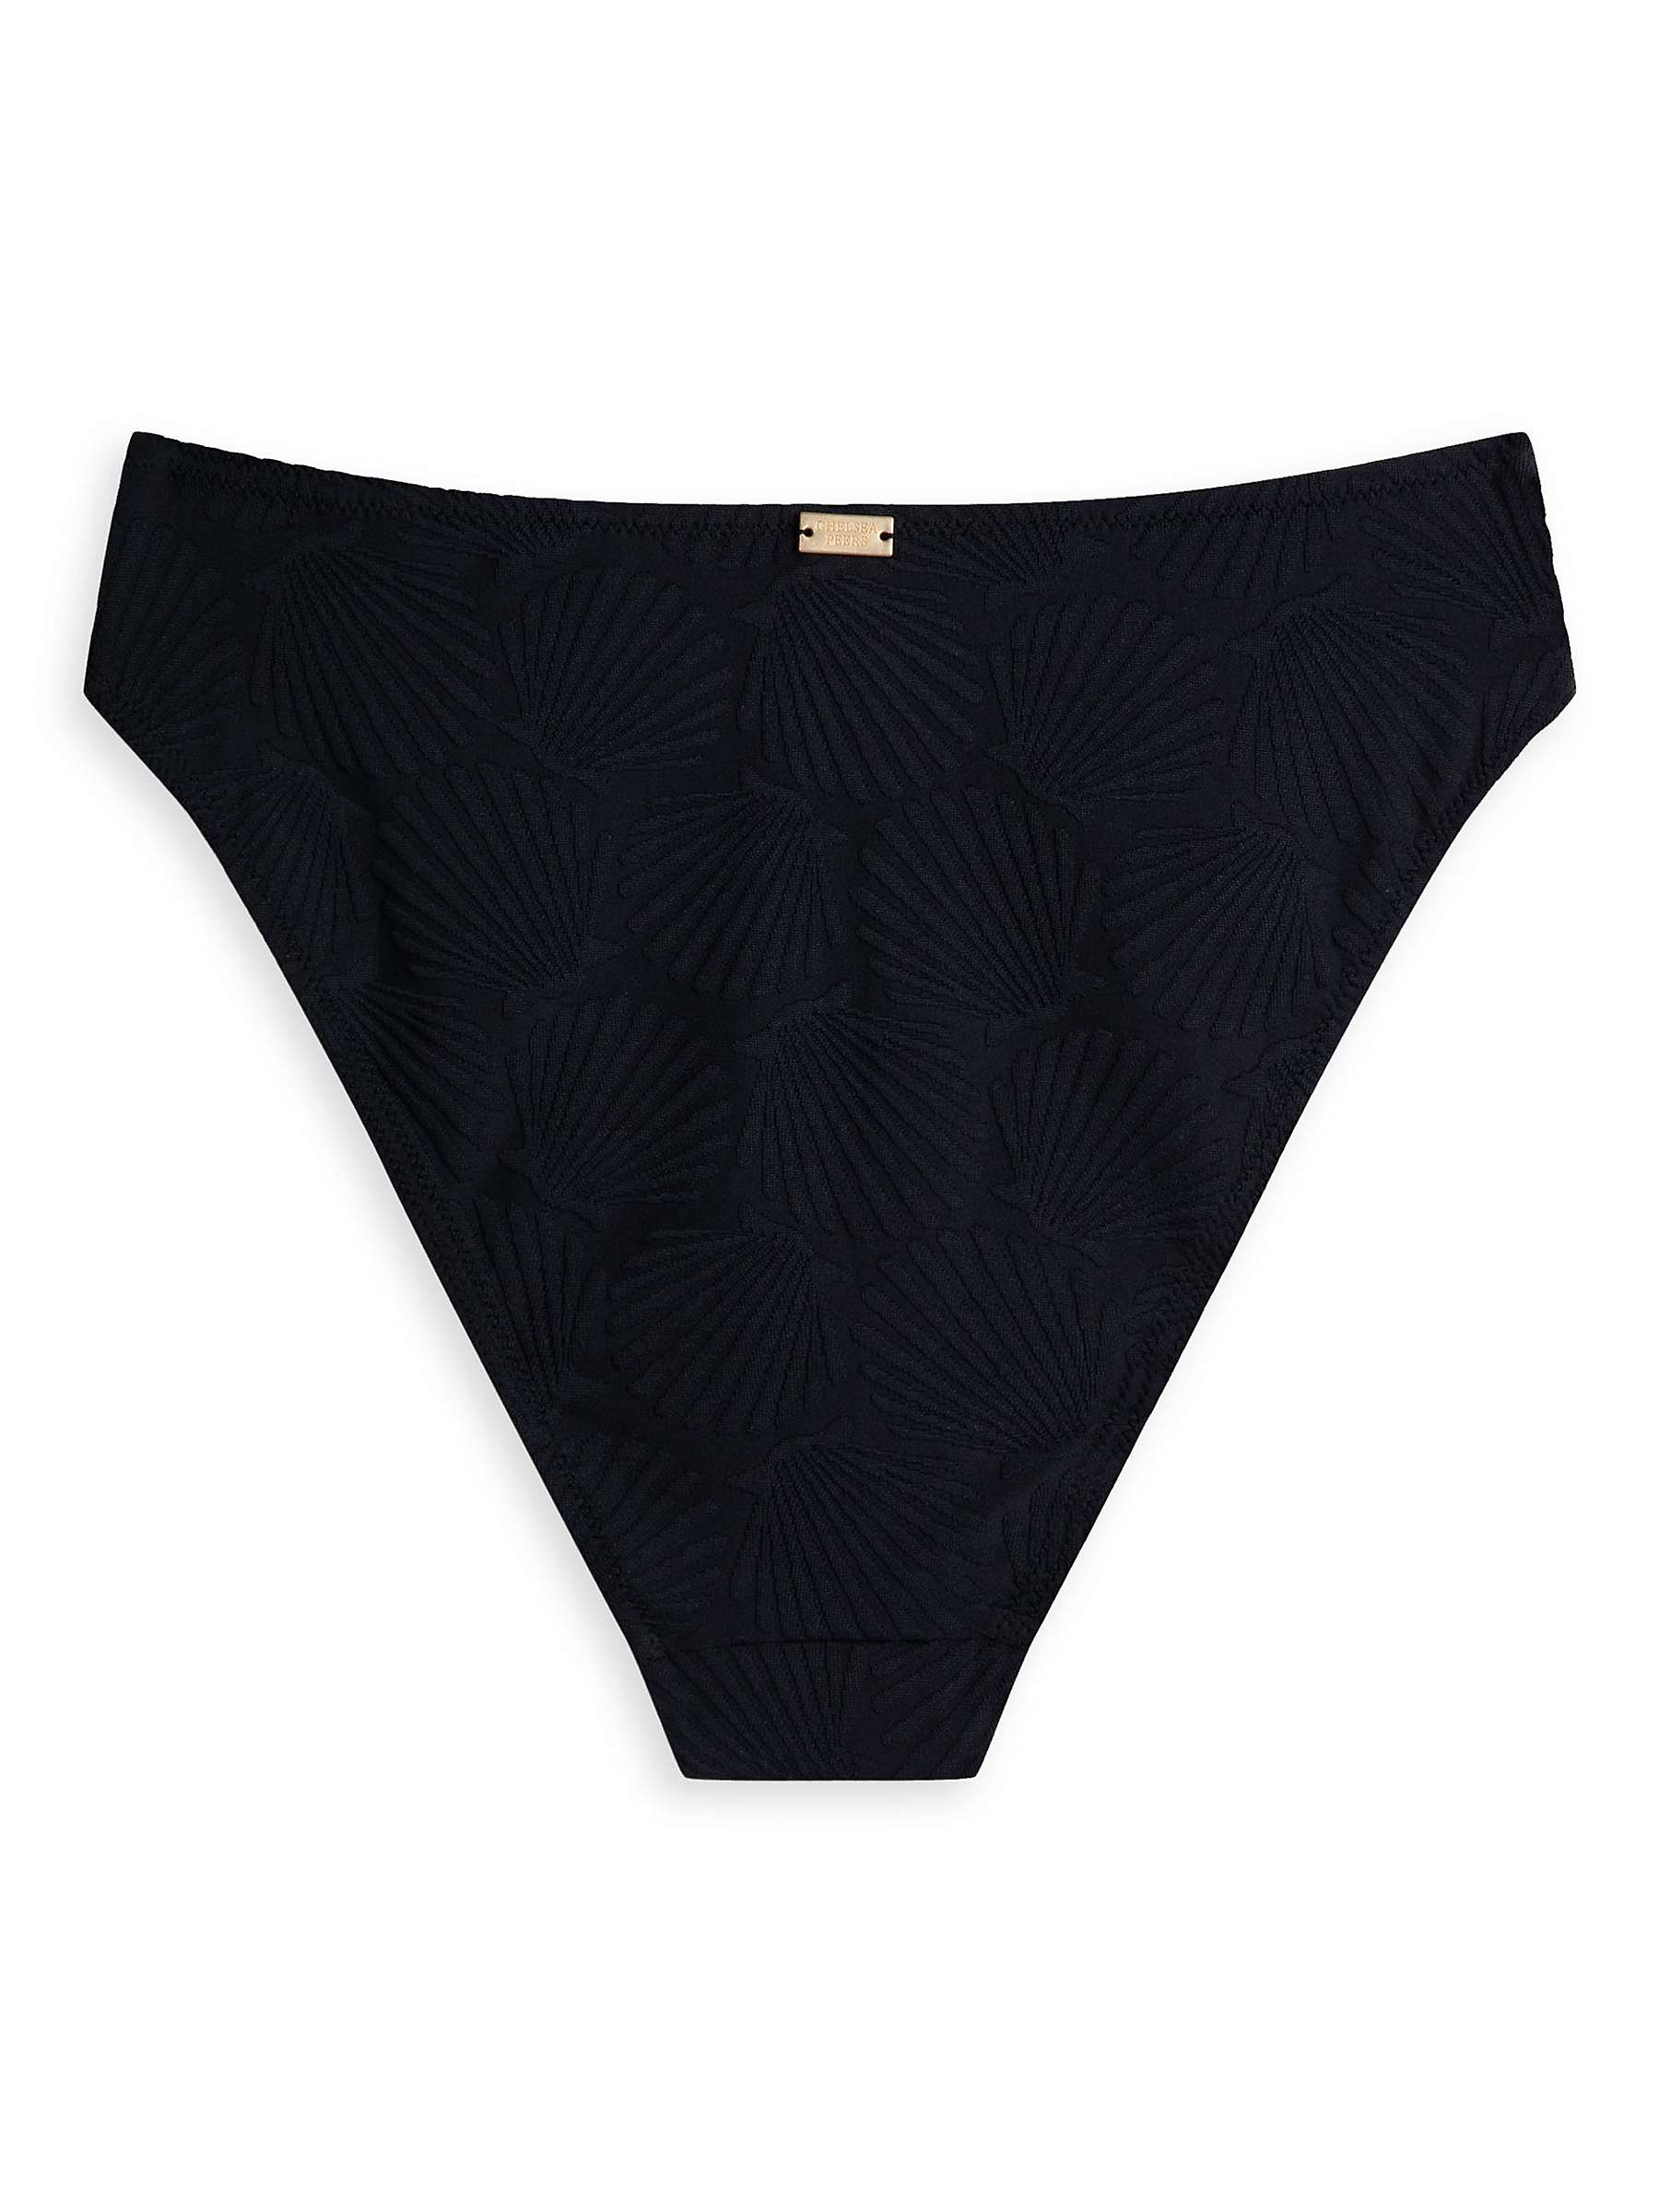 Buy Chelsea Peers Jacquard Shell High Waist Bikini Bottoms, Black Online at johnlewis.com